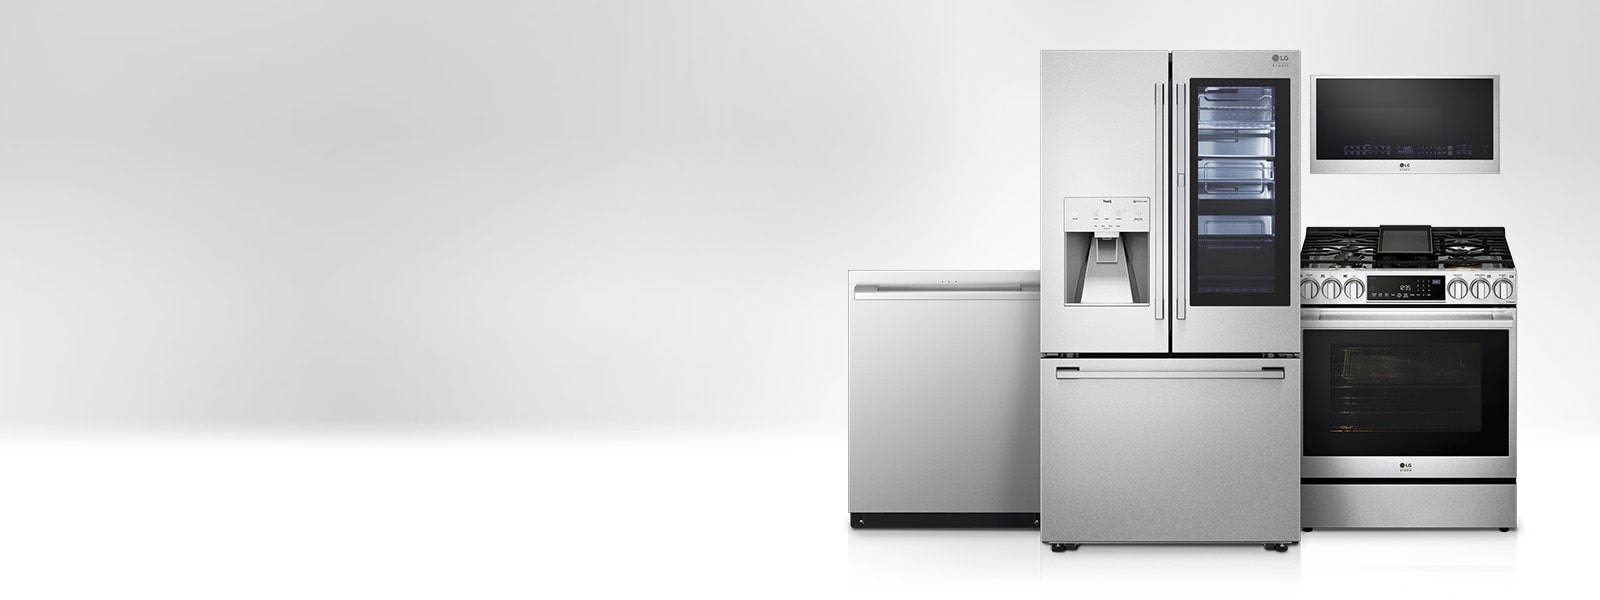 Luxury kitchen with LG STUDIO Appliances